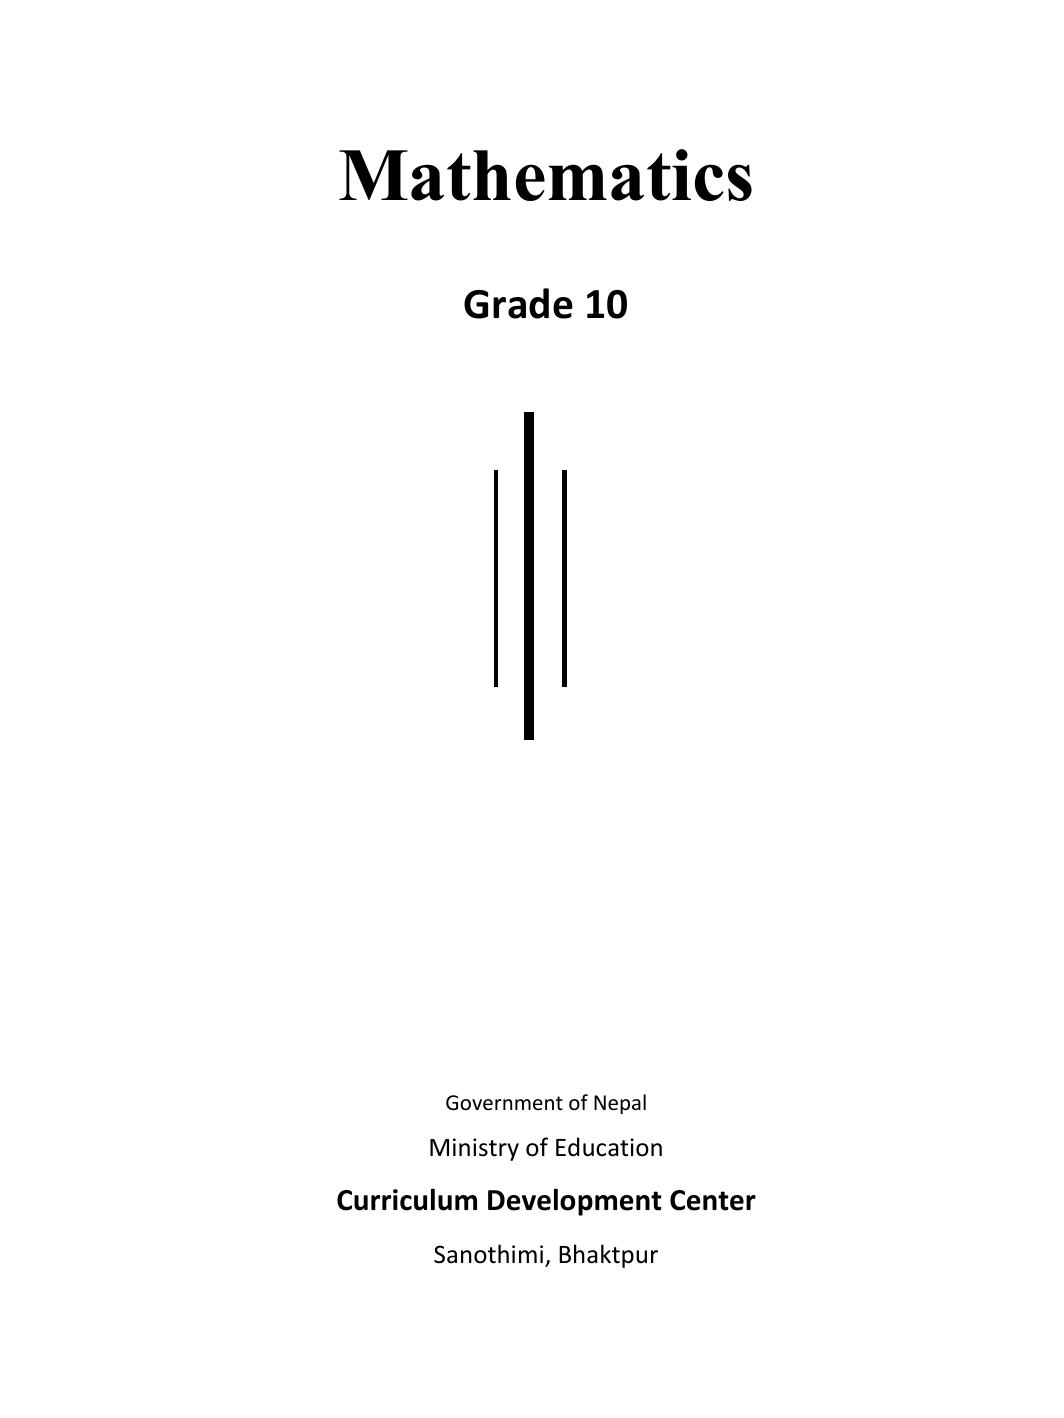 CDC 2011 - Mathematics Grade 10